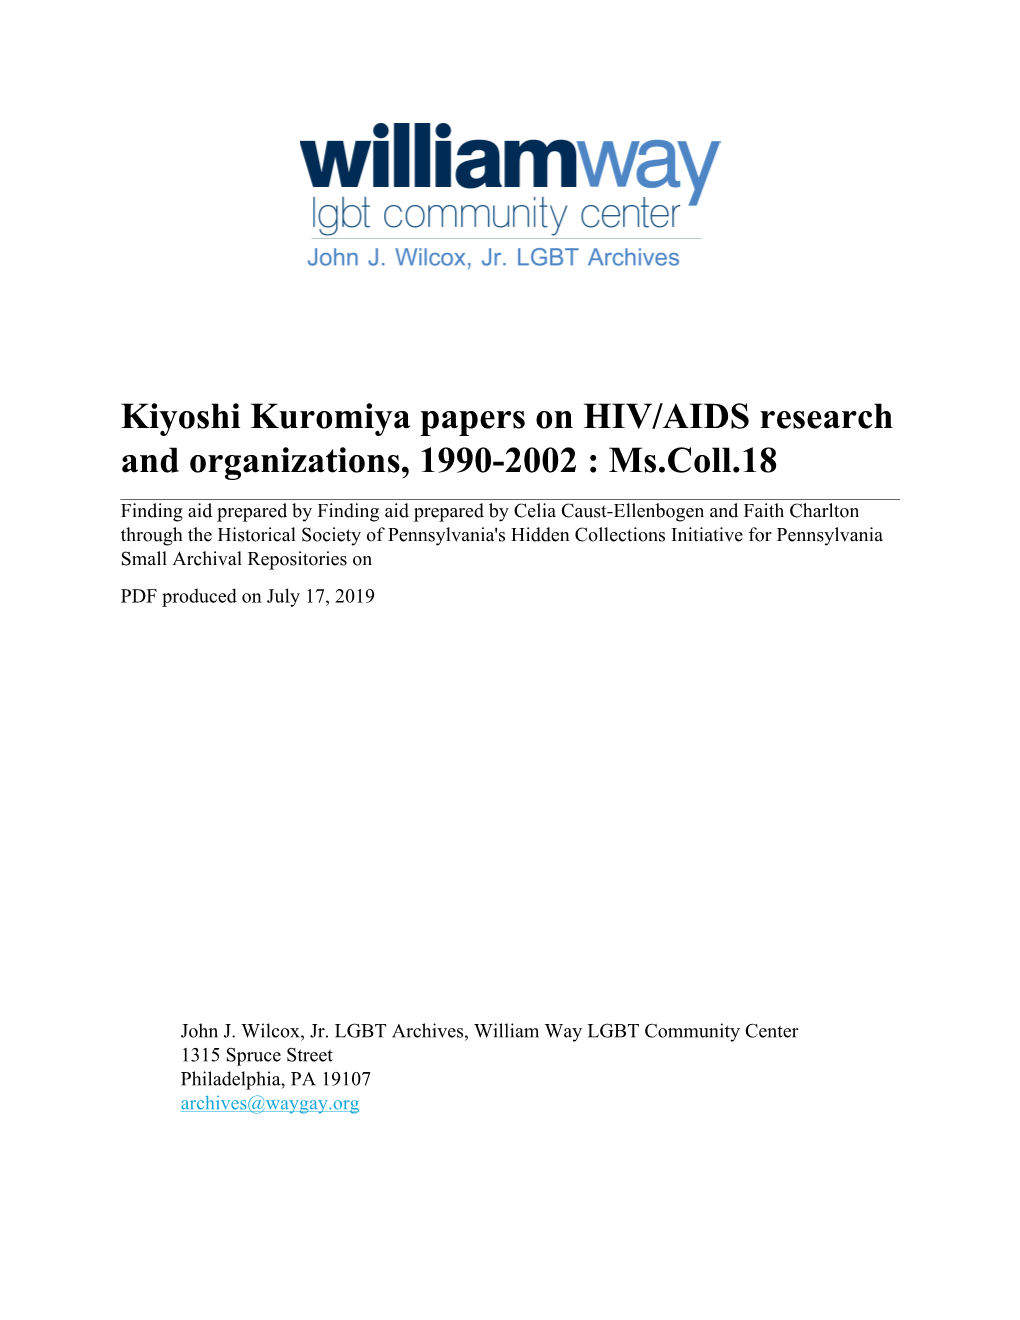 Kiyoshi Kuromiya Papers on HIV/AIDS Research and Organizations, 1990-2002 : Ms.Coll.18